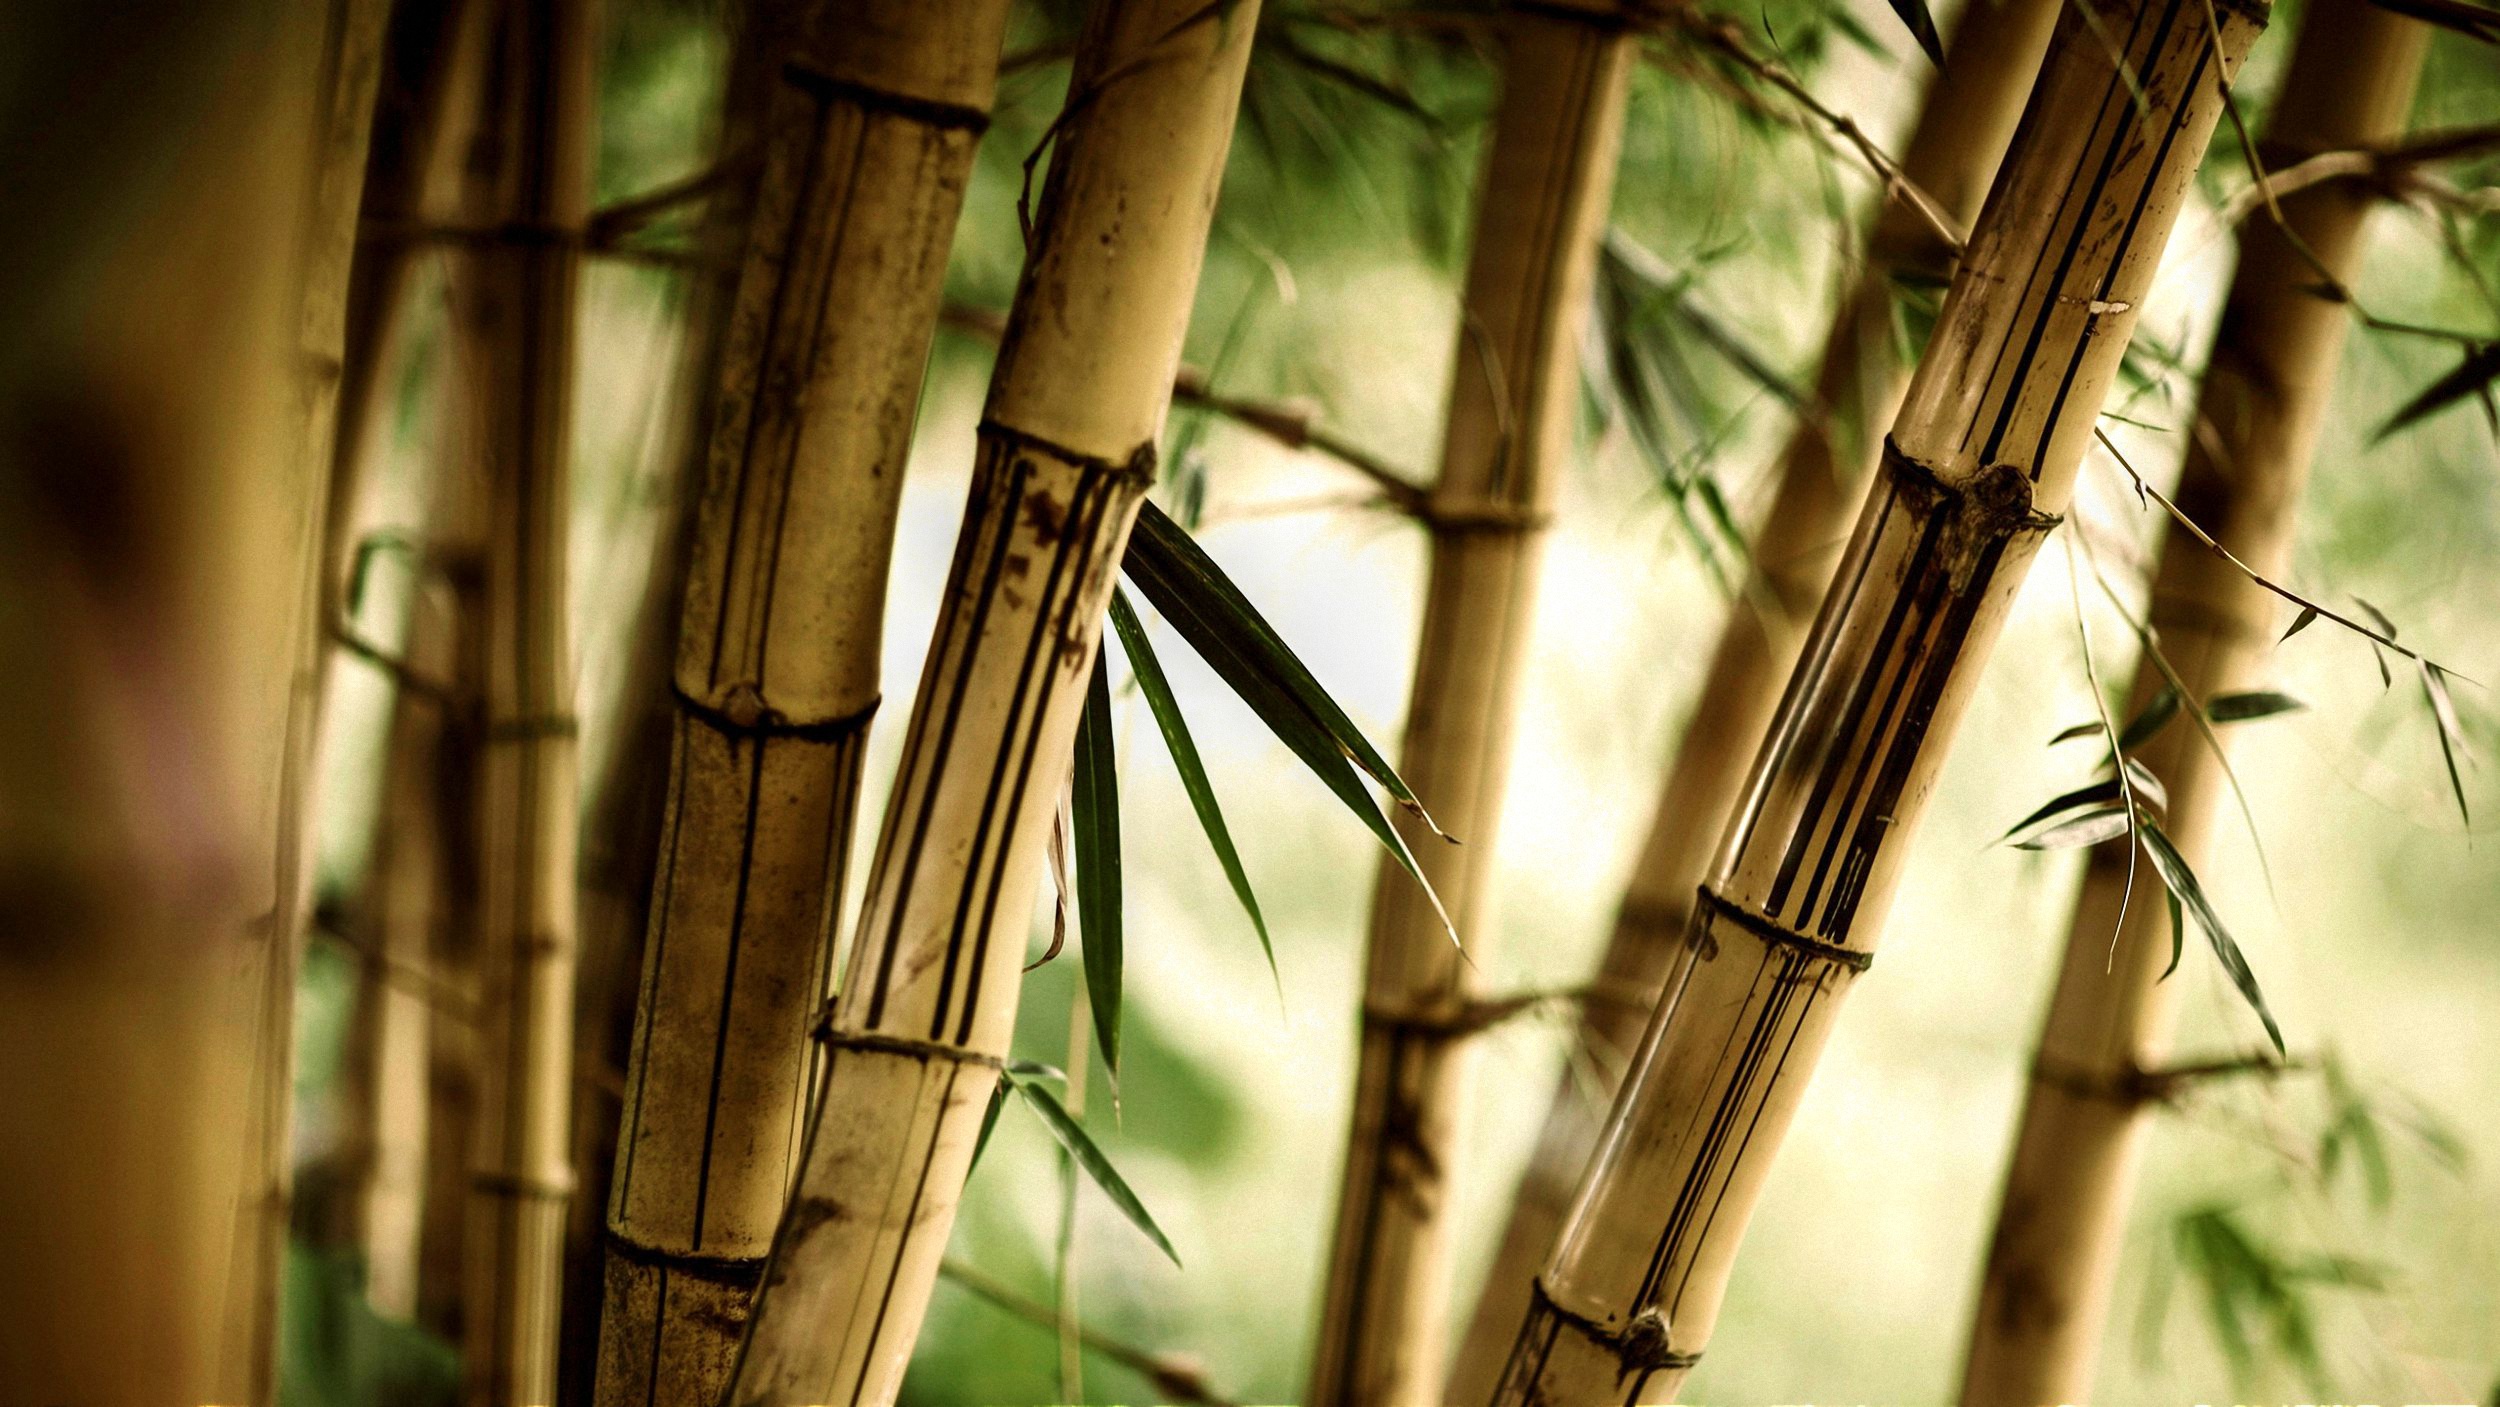 713754 descargar imagen tierra/naturaleza, bambú: fondos de pantalla y protectores de pantalla gratis